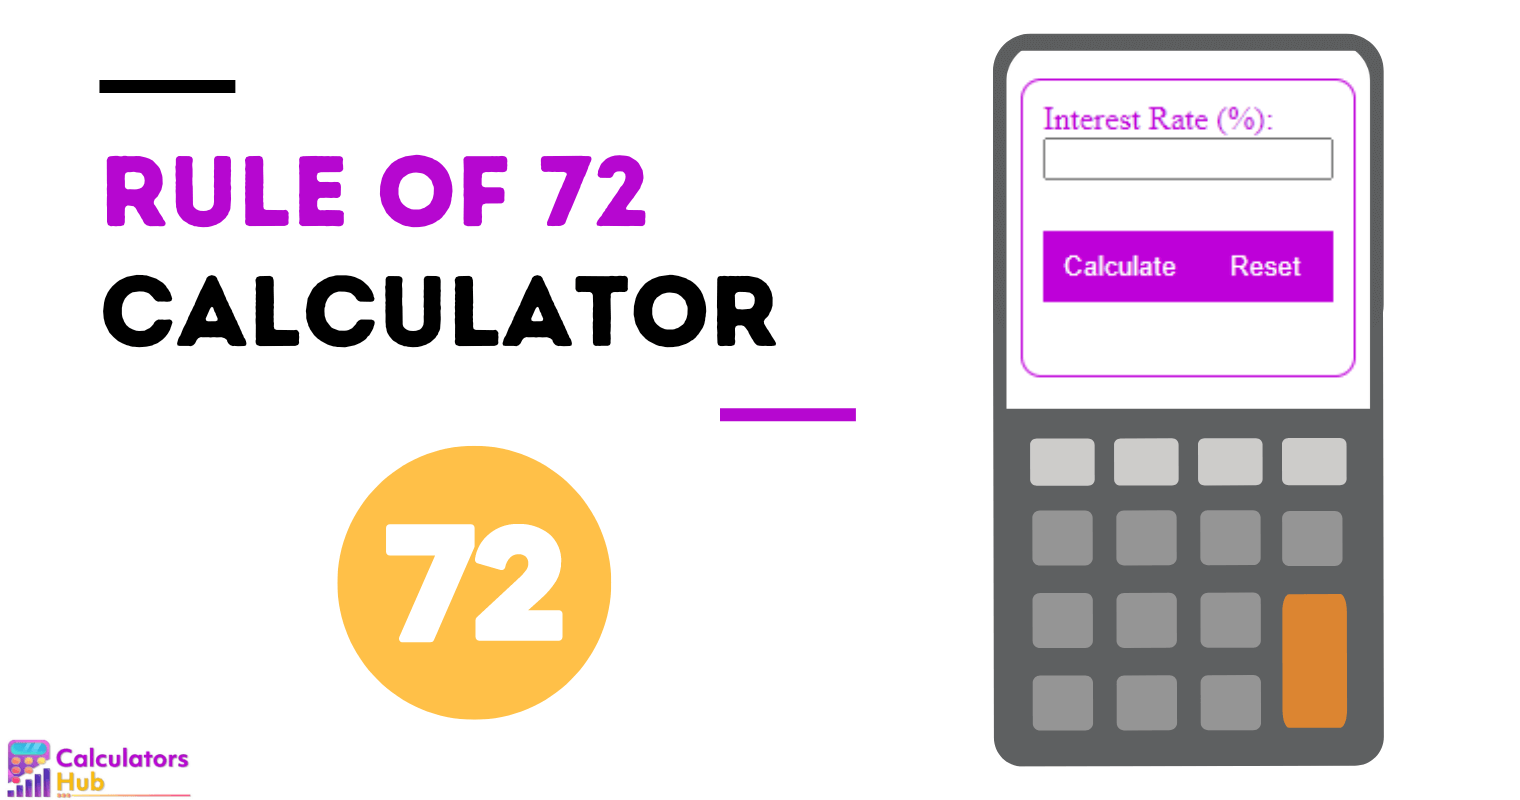 Rule of 72 Calculator